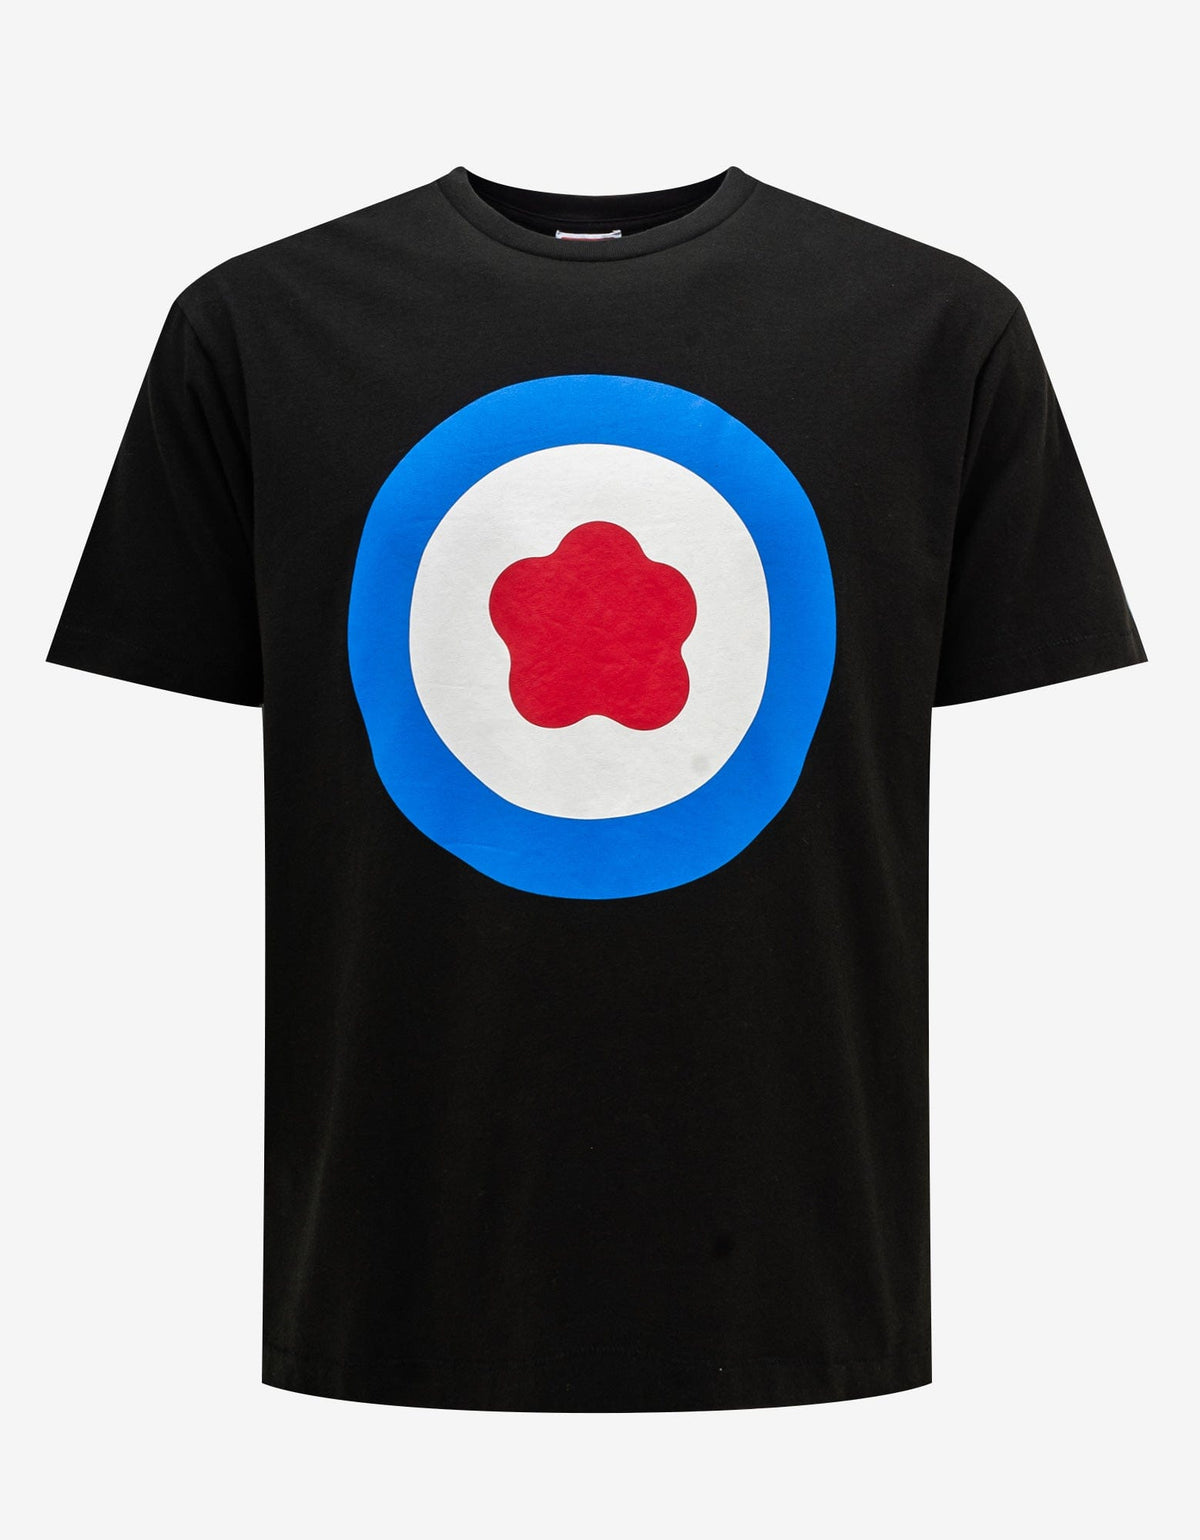 Kenzo Black 'Kenzo Target' Oversize T-Shirt